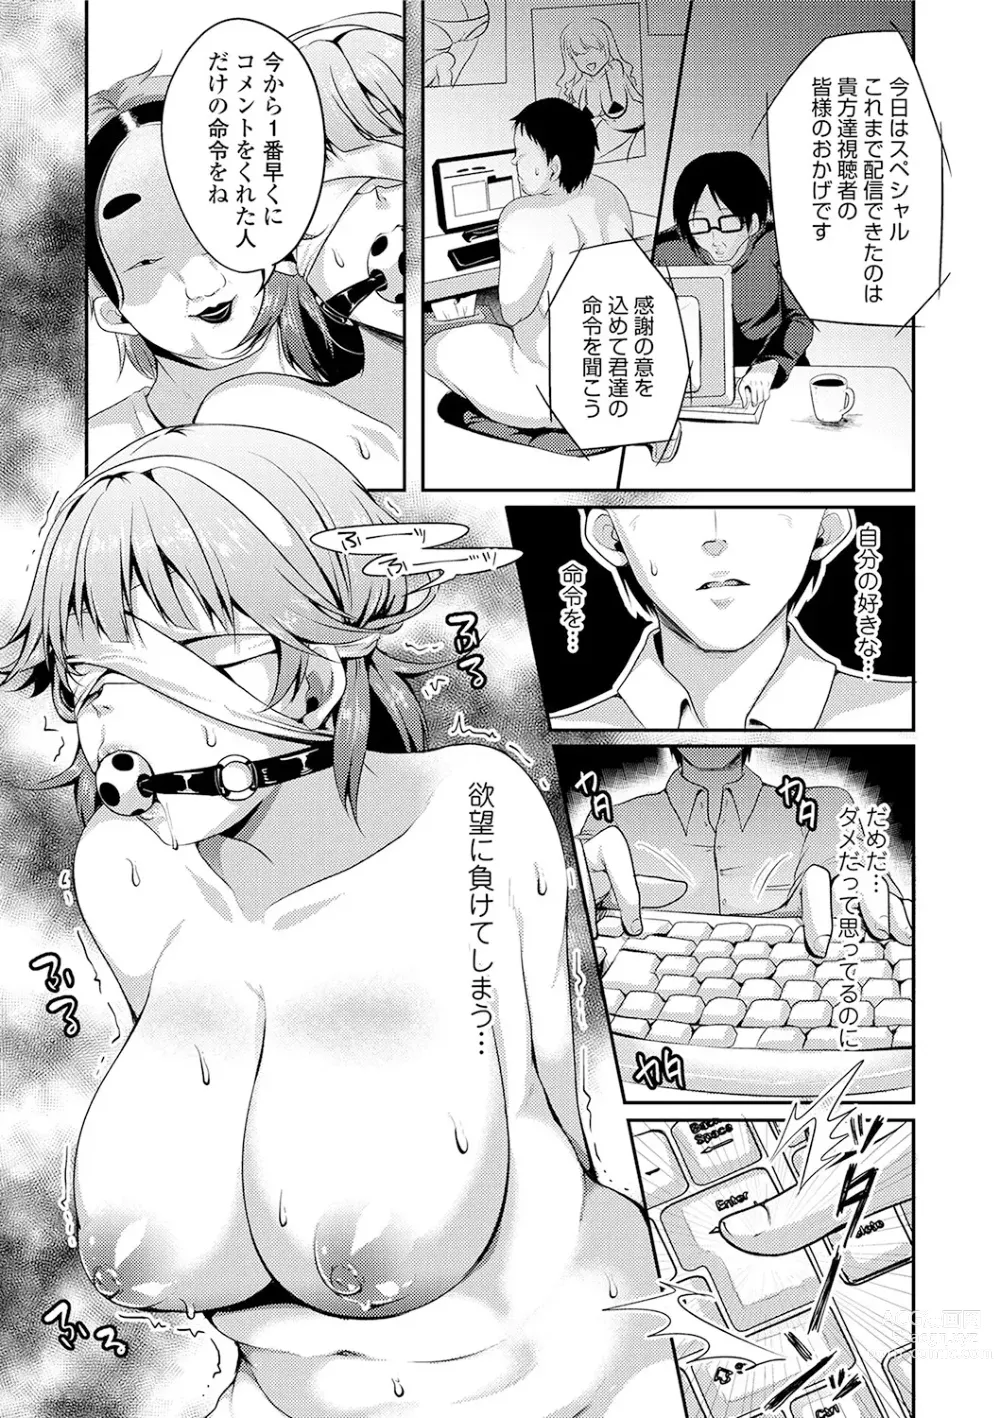 Page 9 of manga Kowashite Asobo + DLsite Gentei Chara Settei & Plot